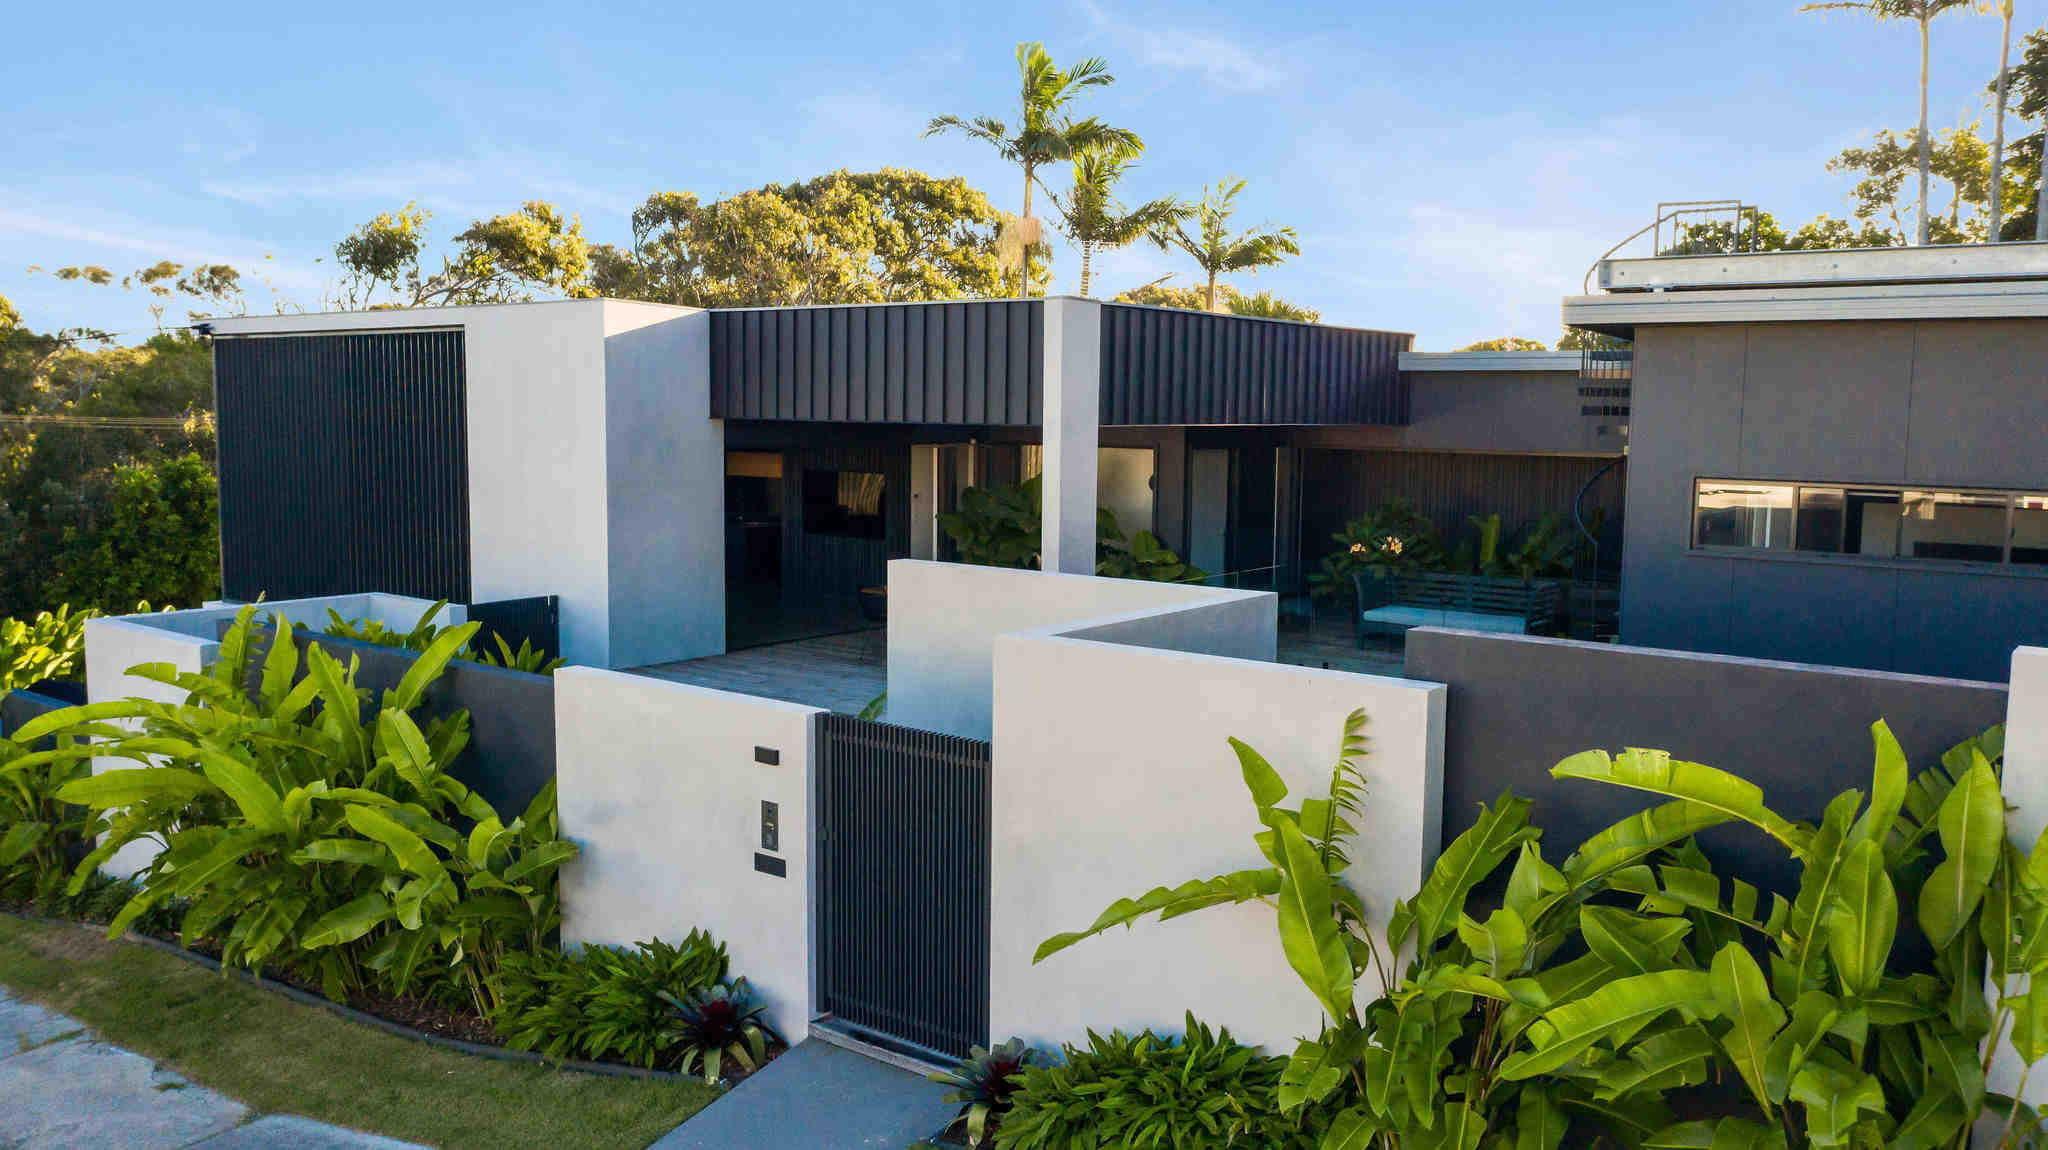 Builder of one of Australia’s best homes has grand plans